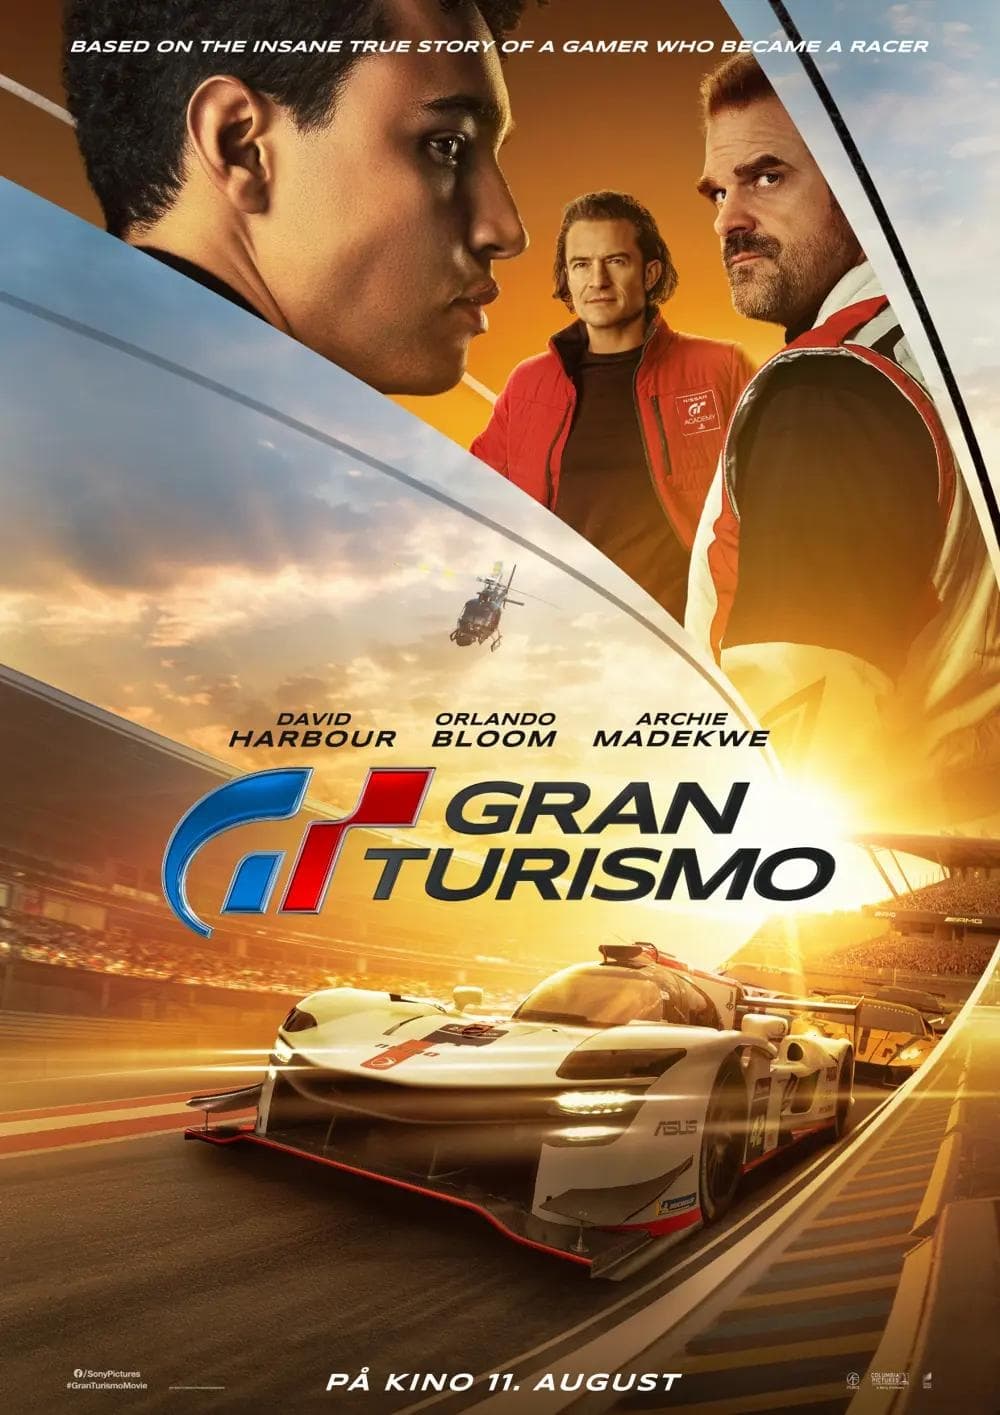 Poster for the movie "Gran Turismo"